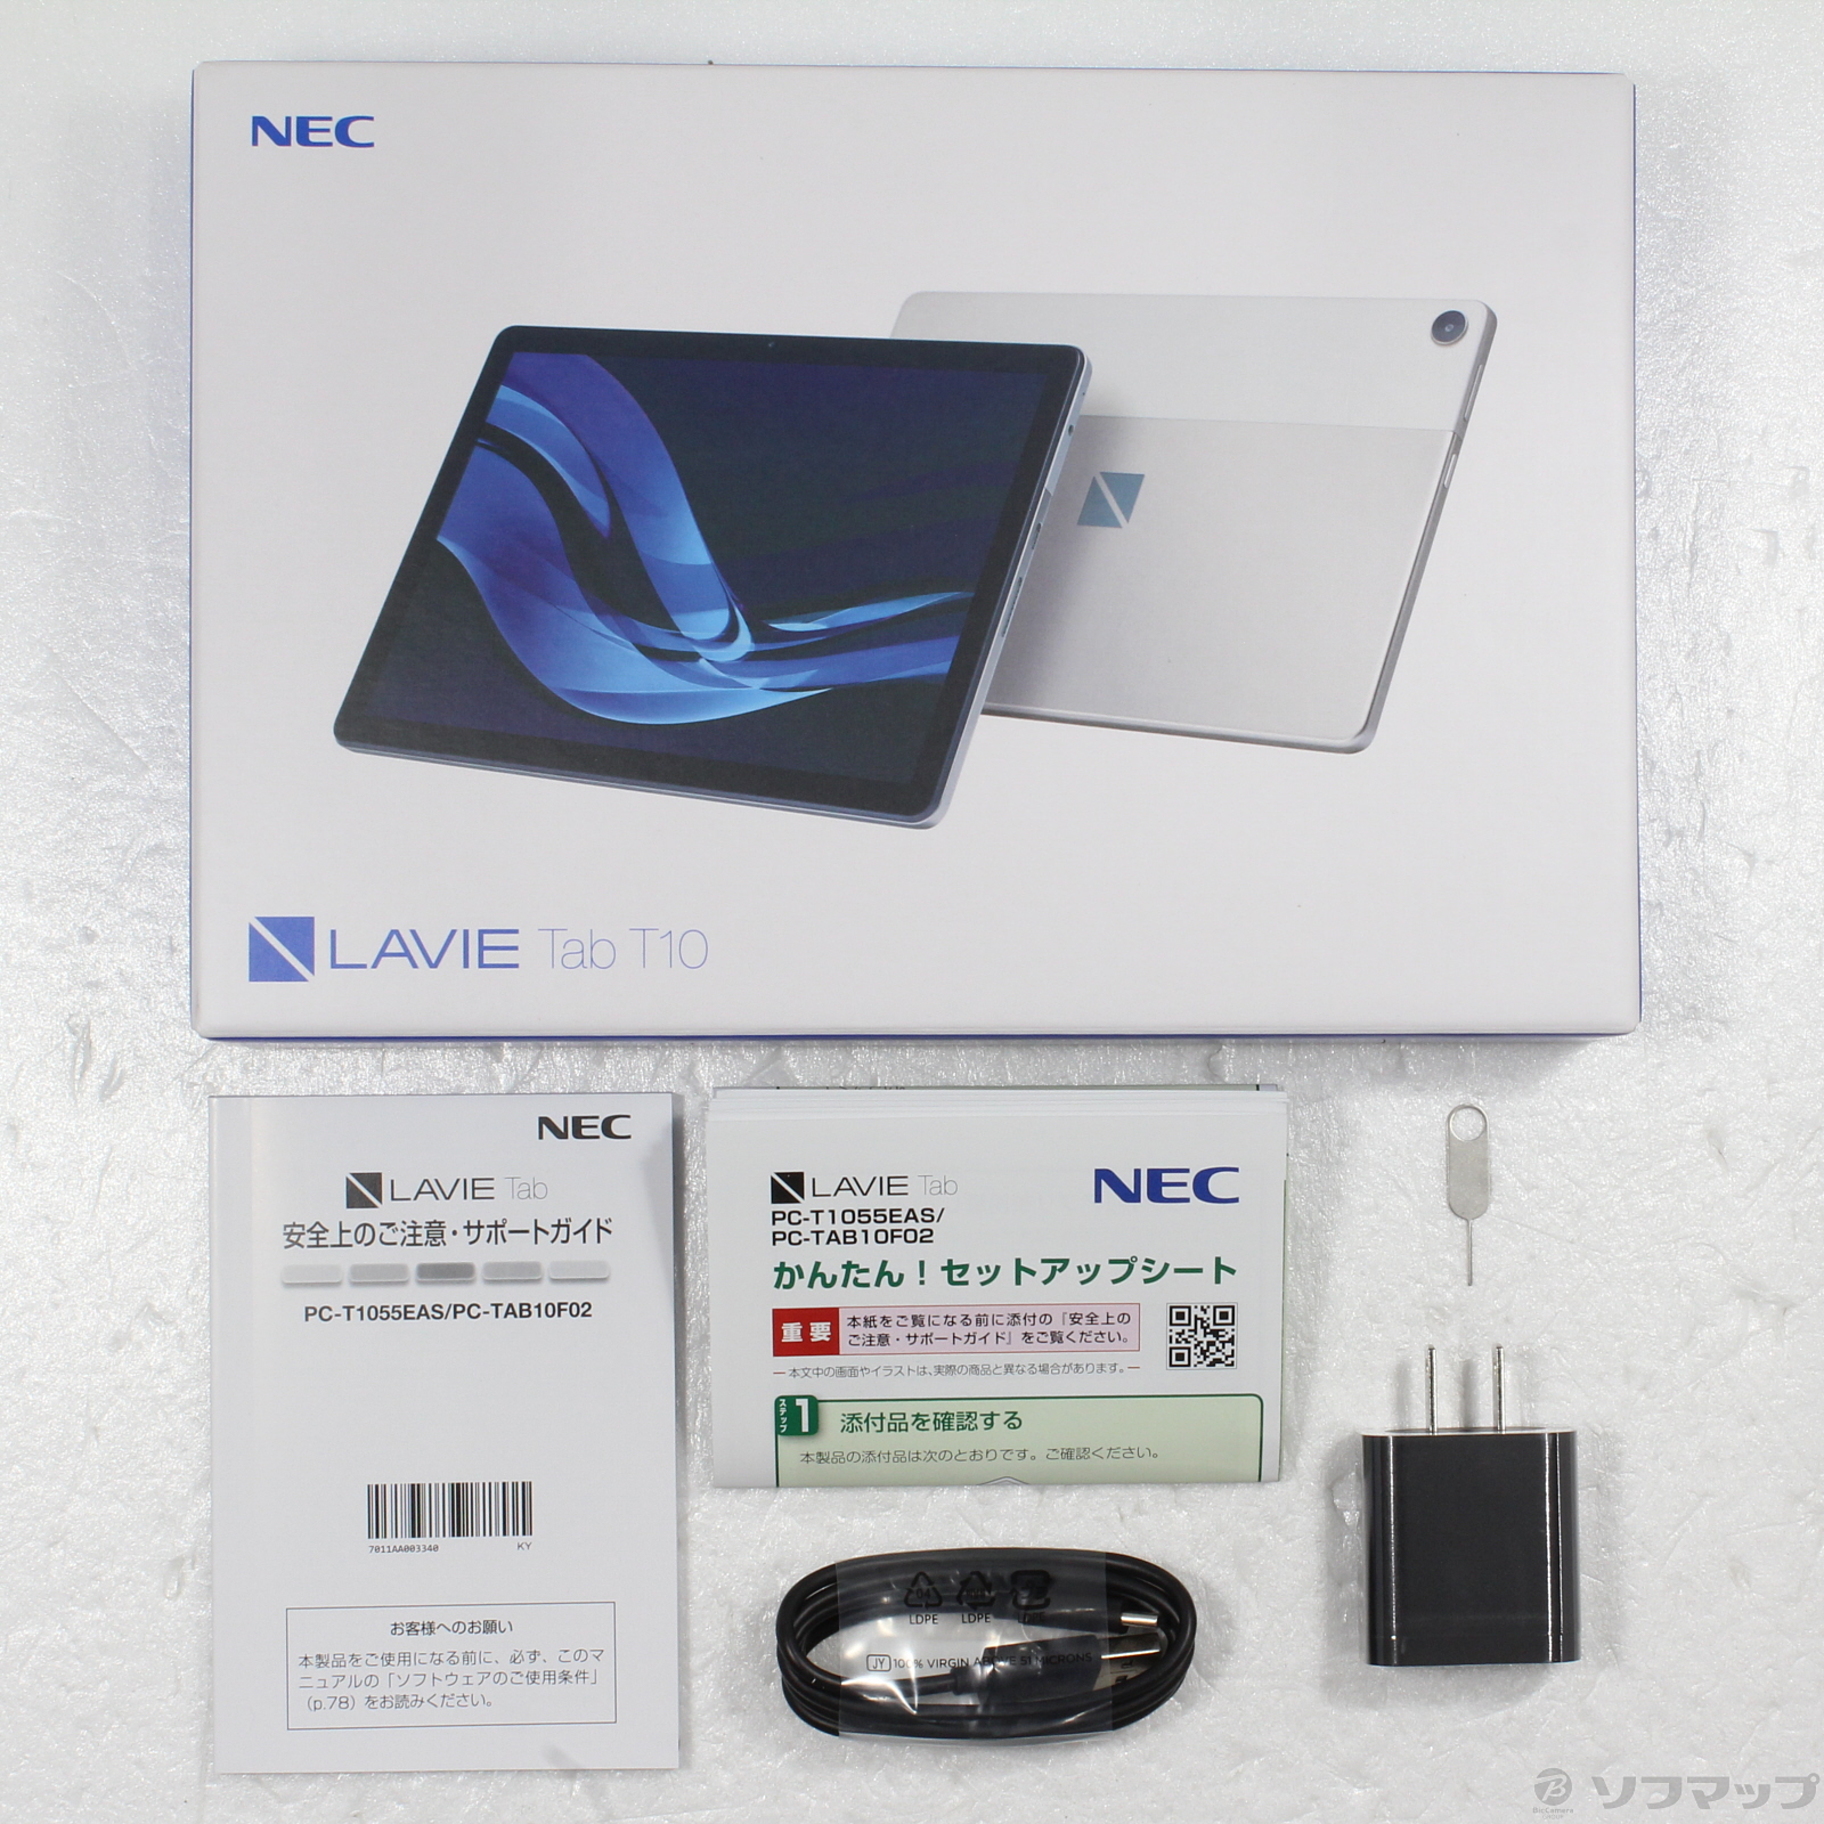 For NEC LAVIE Tab T10 T1055/EAS PC-T1055